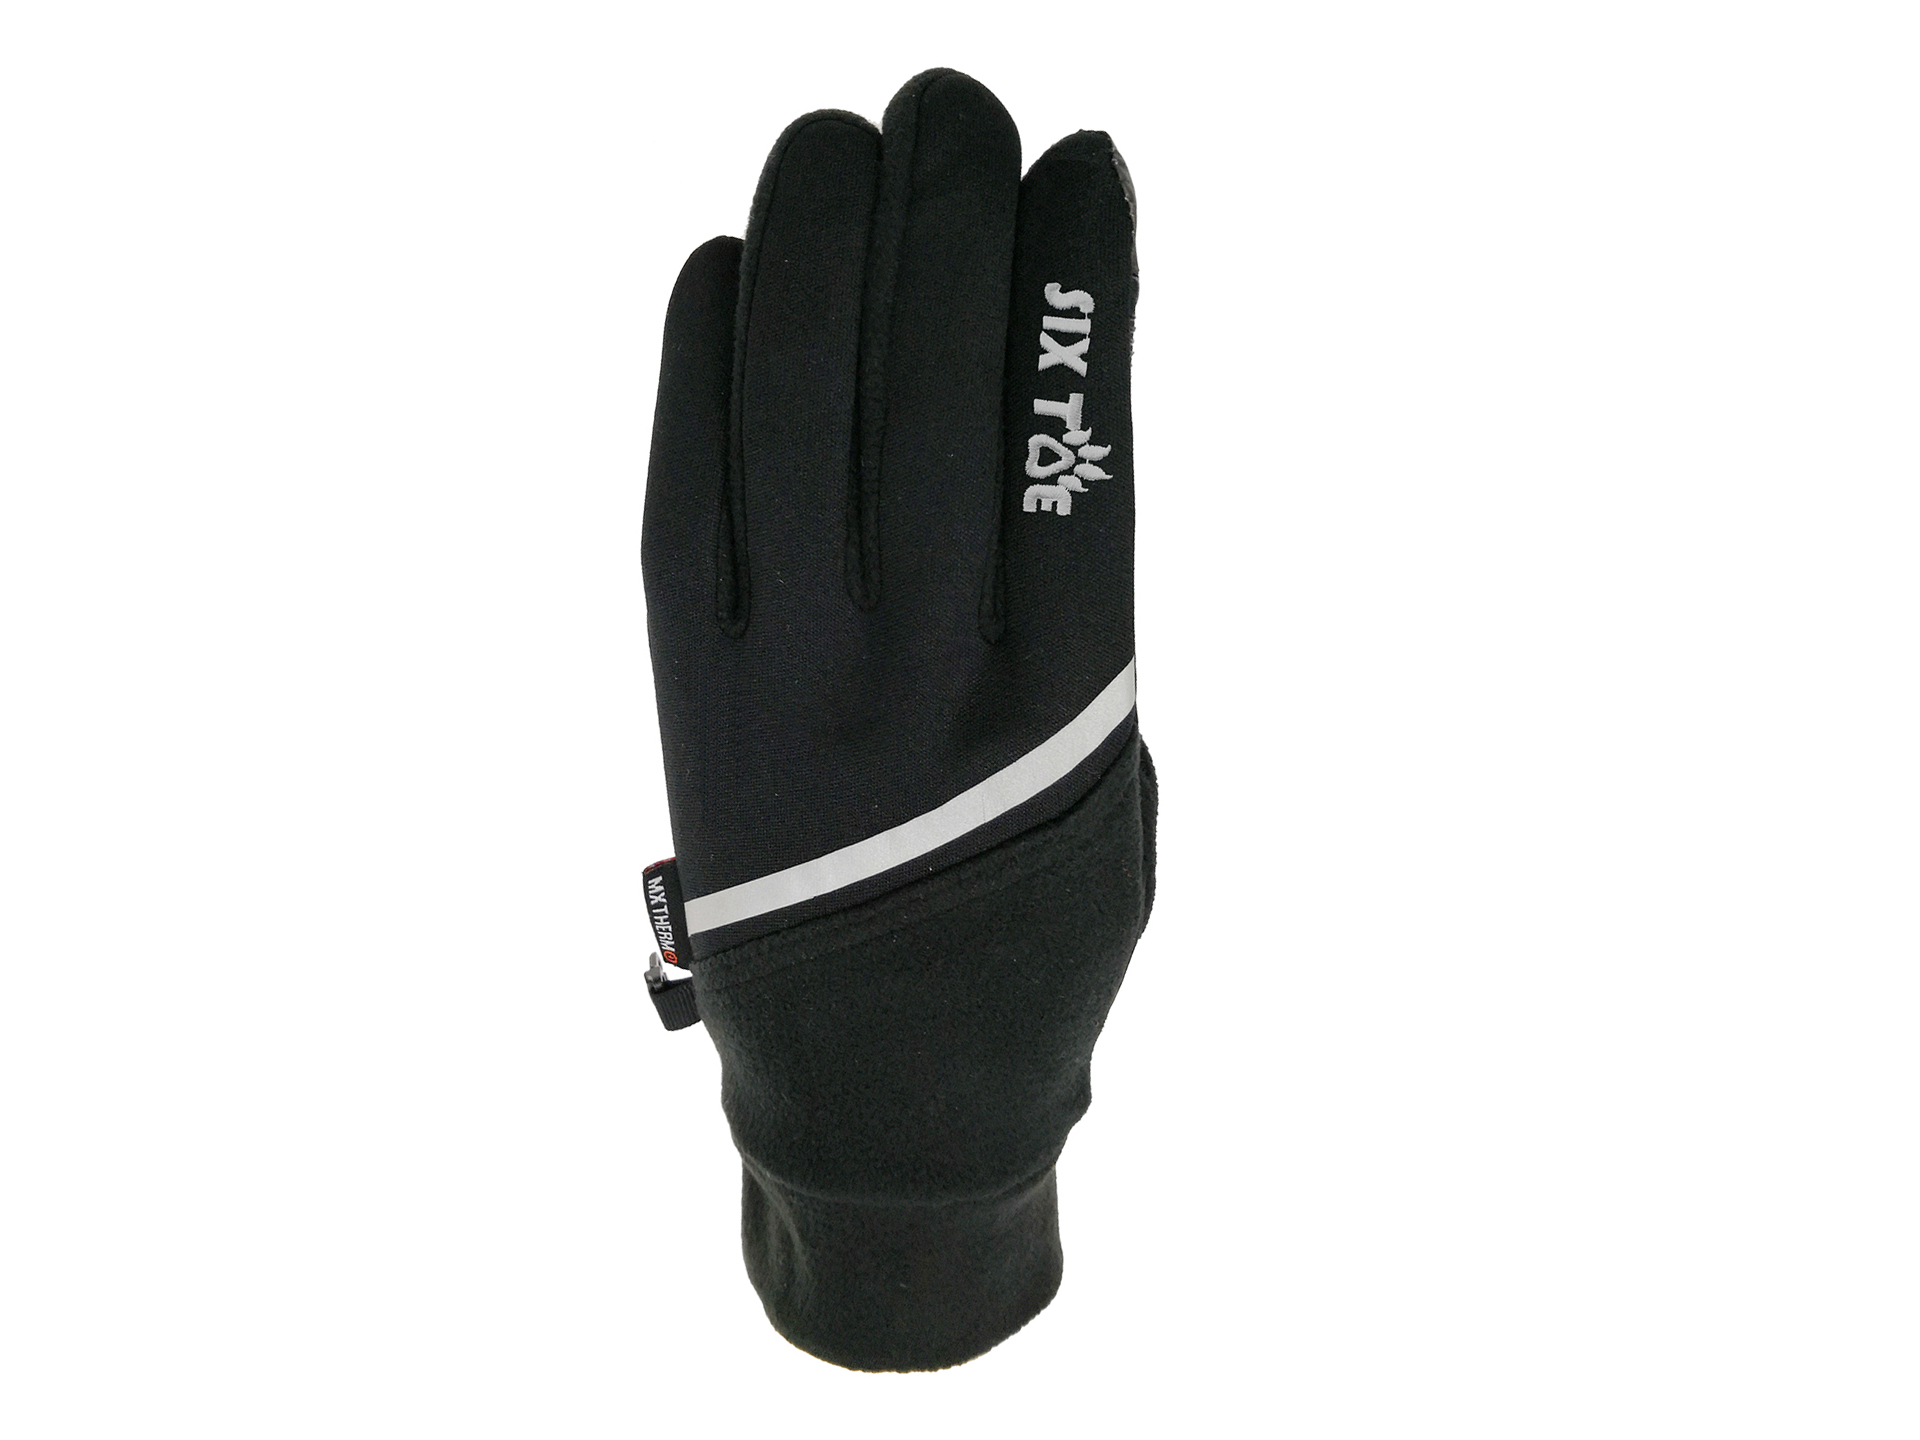 Running Gloves Womens Cold Weather Touchscreen Compatible  Warm Winter Running Gear for Women